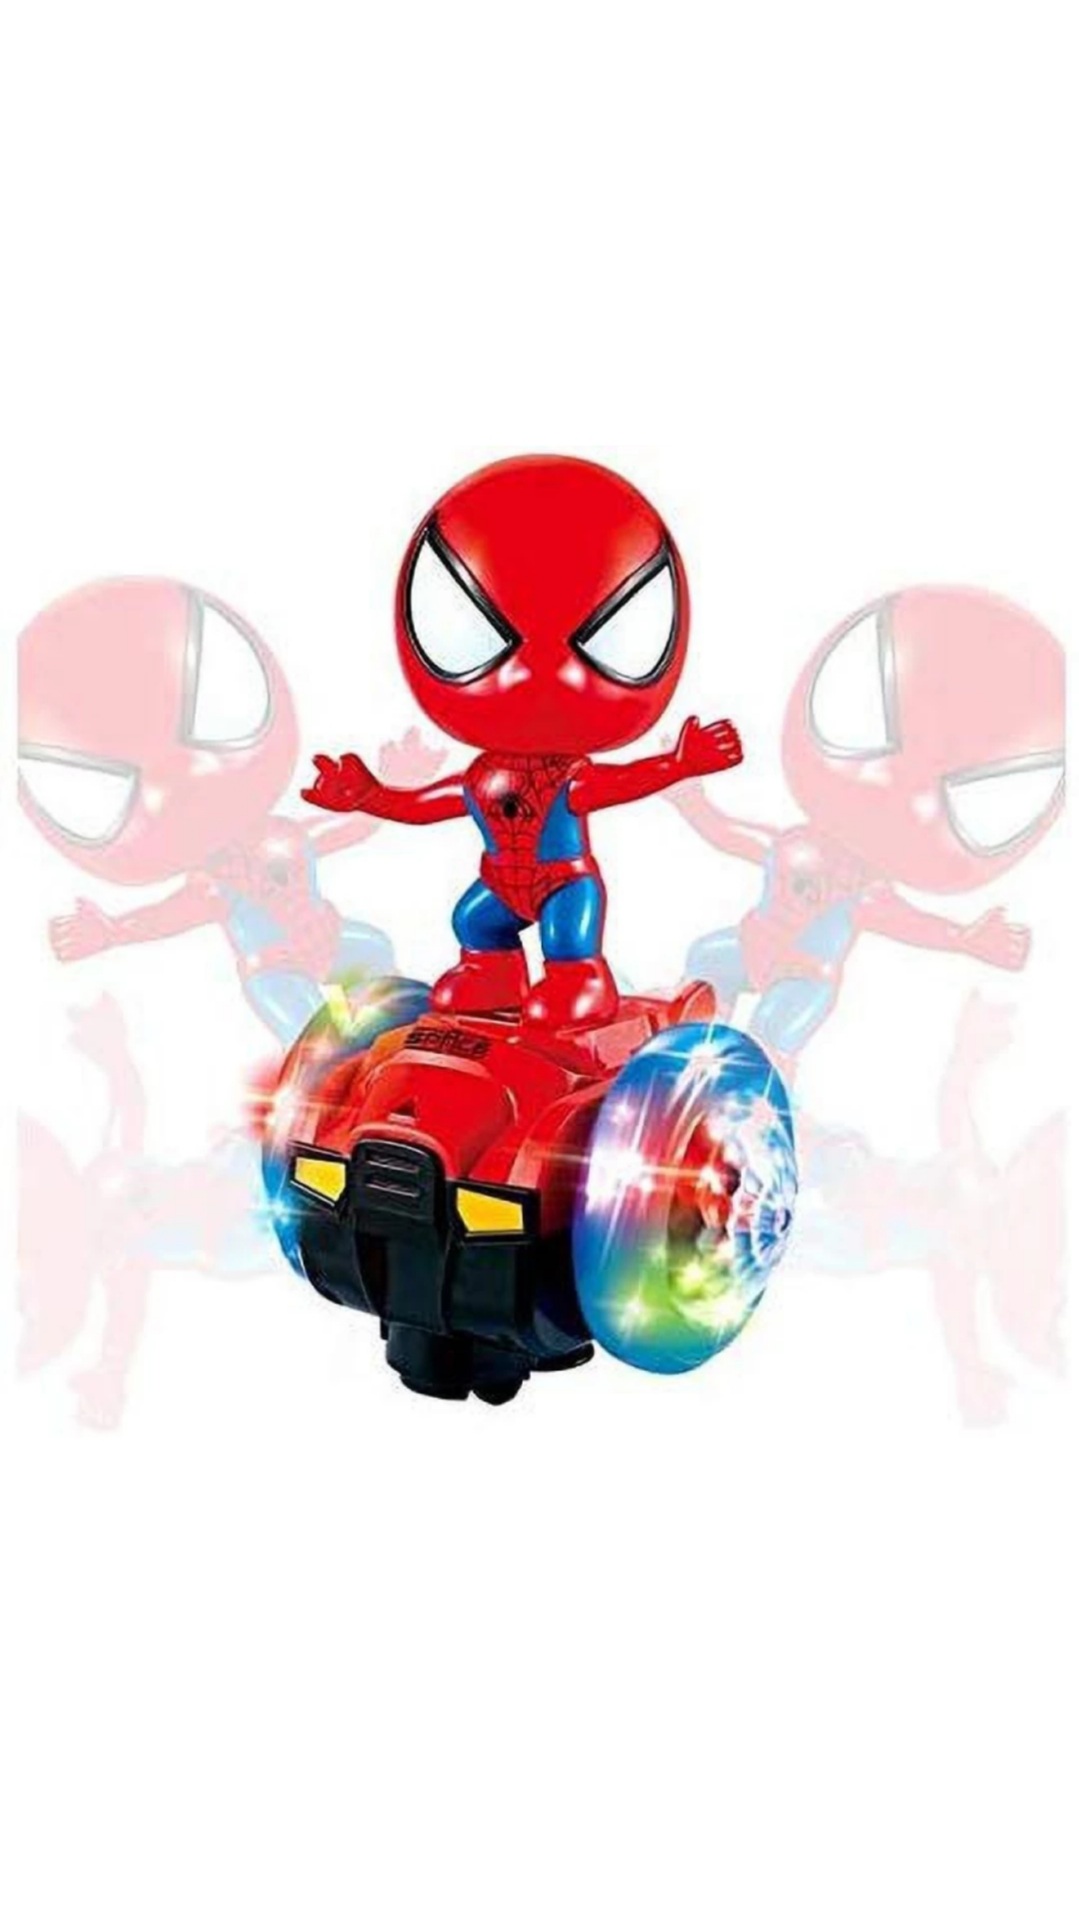 Spider man musical 3d light 360° degree rotate